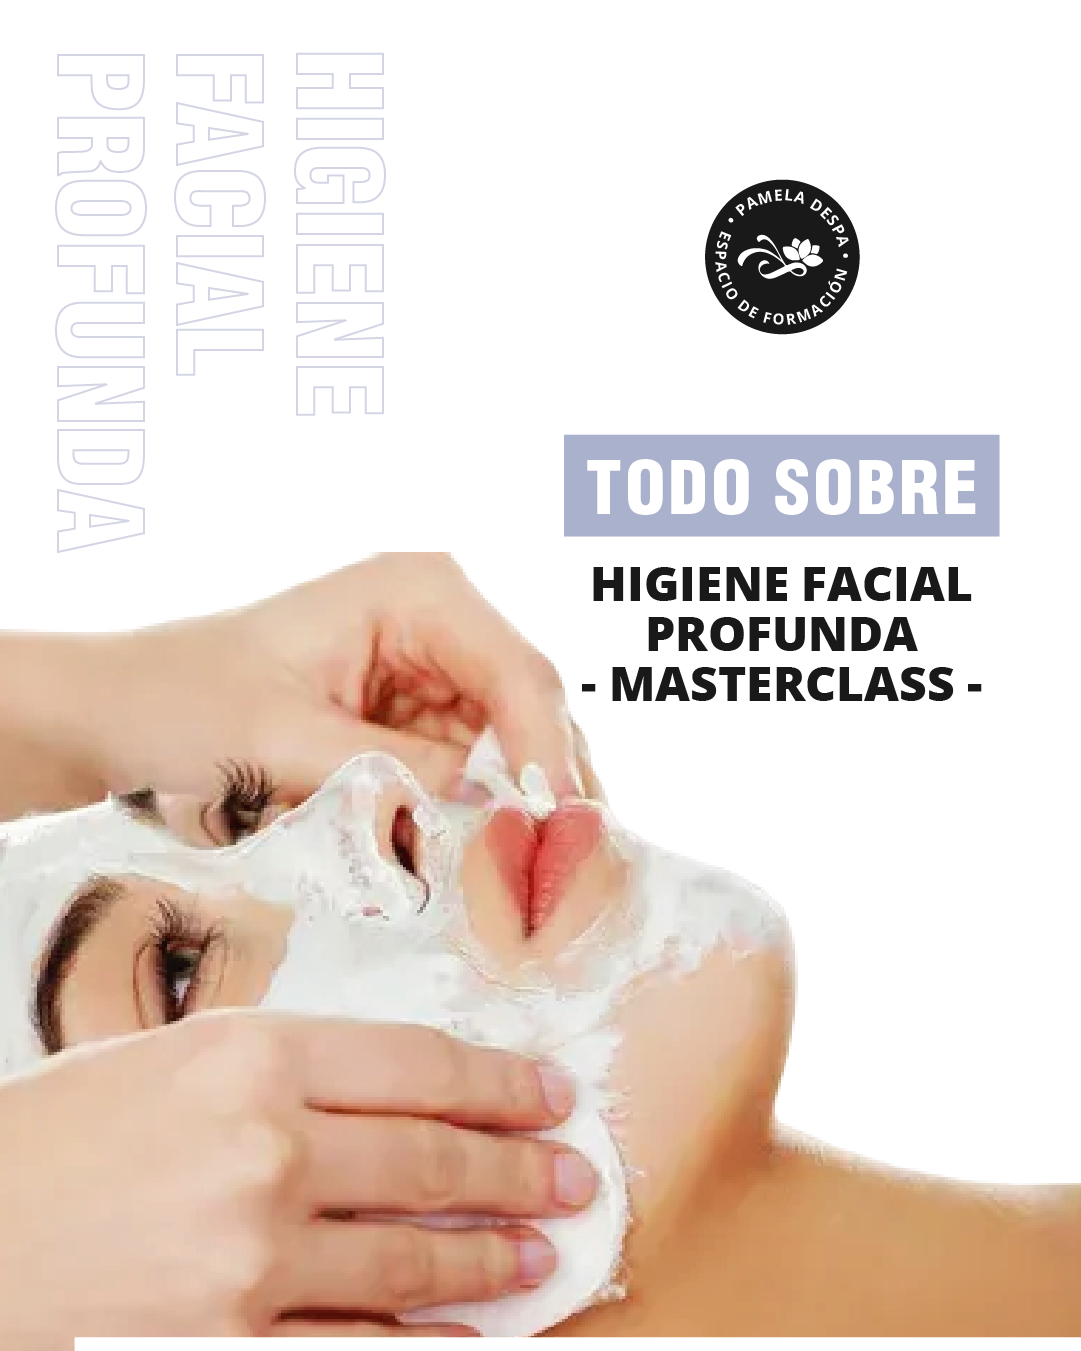 Masterclass en Higiene Facial Profunda